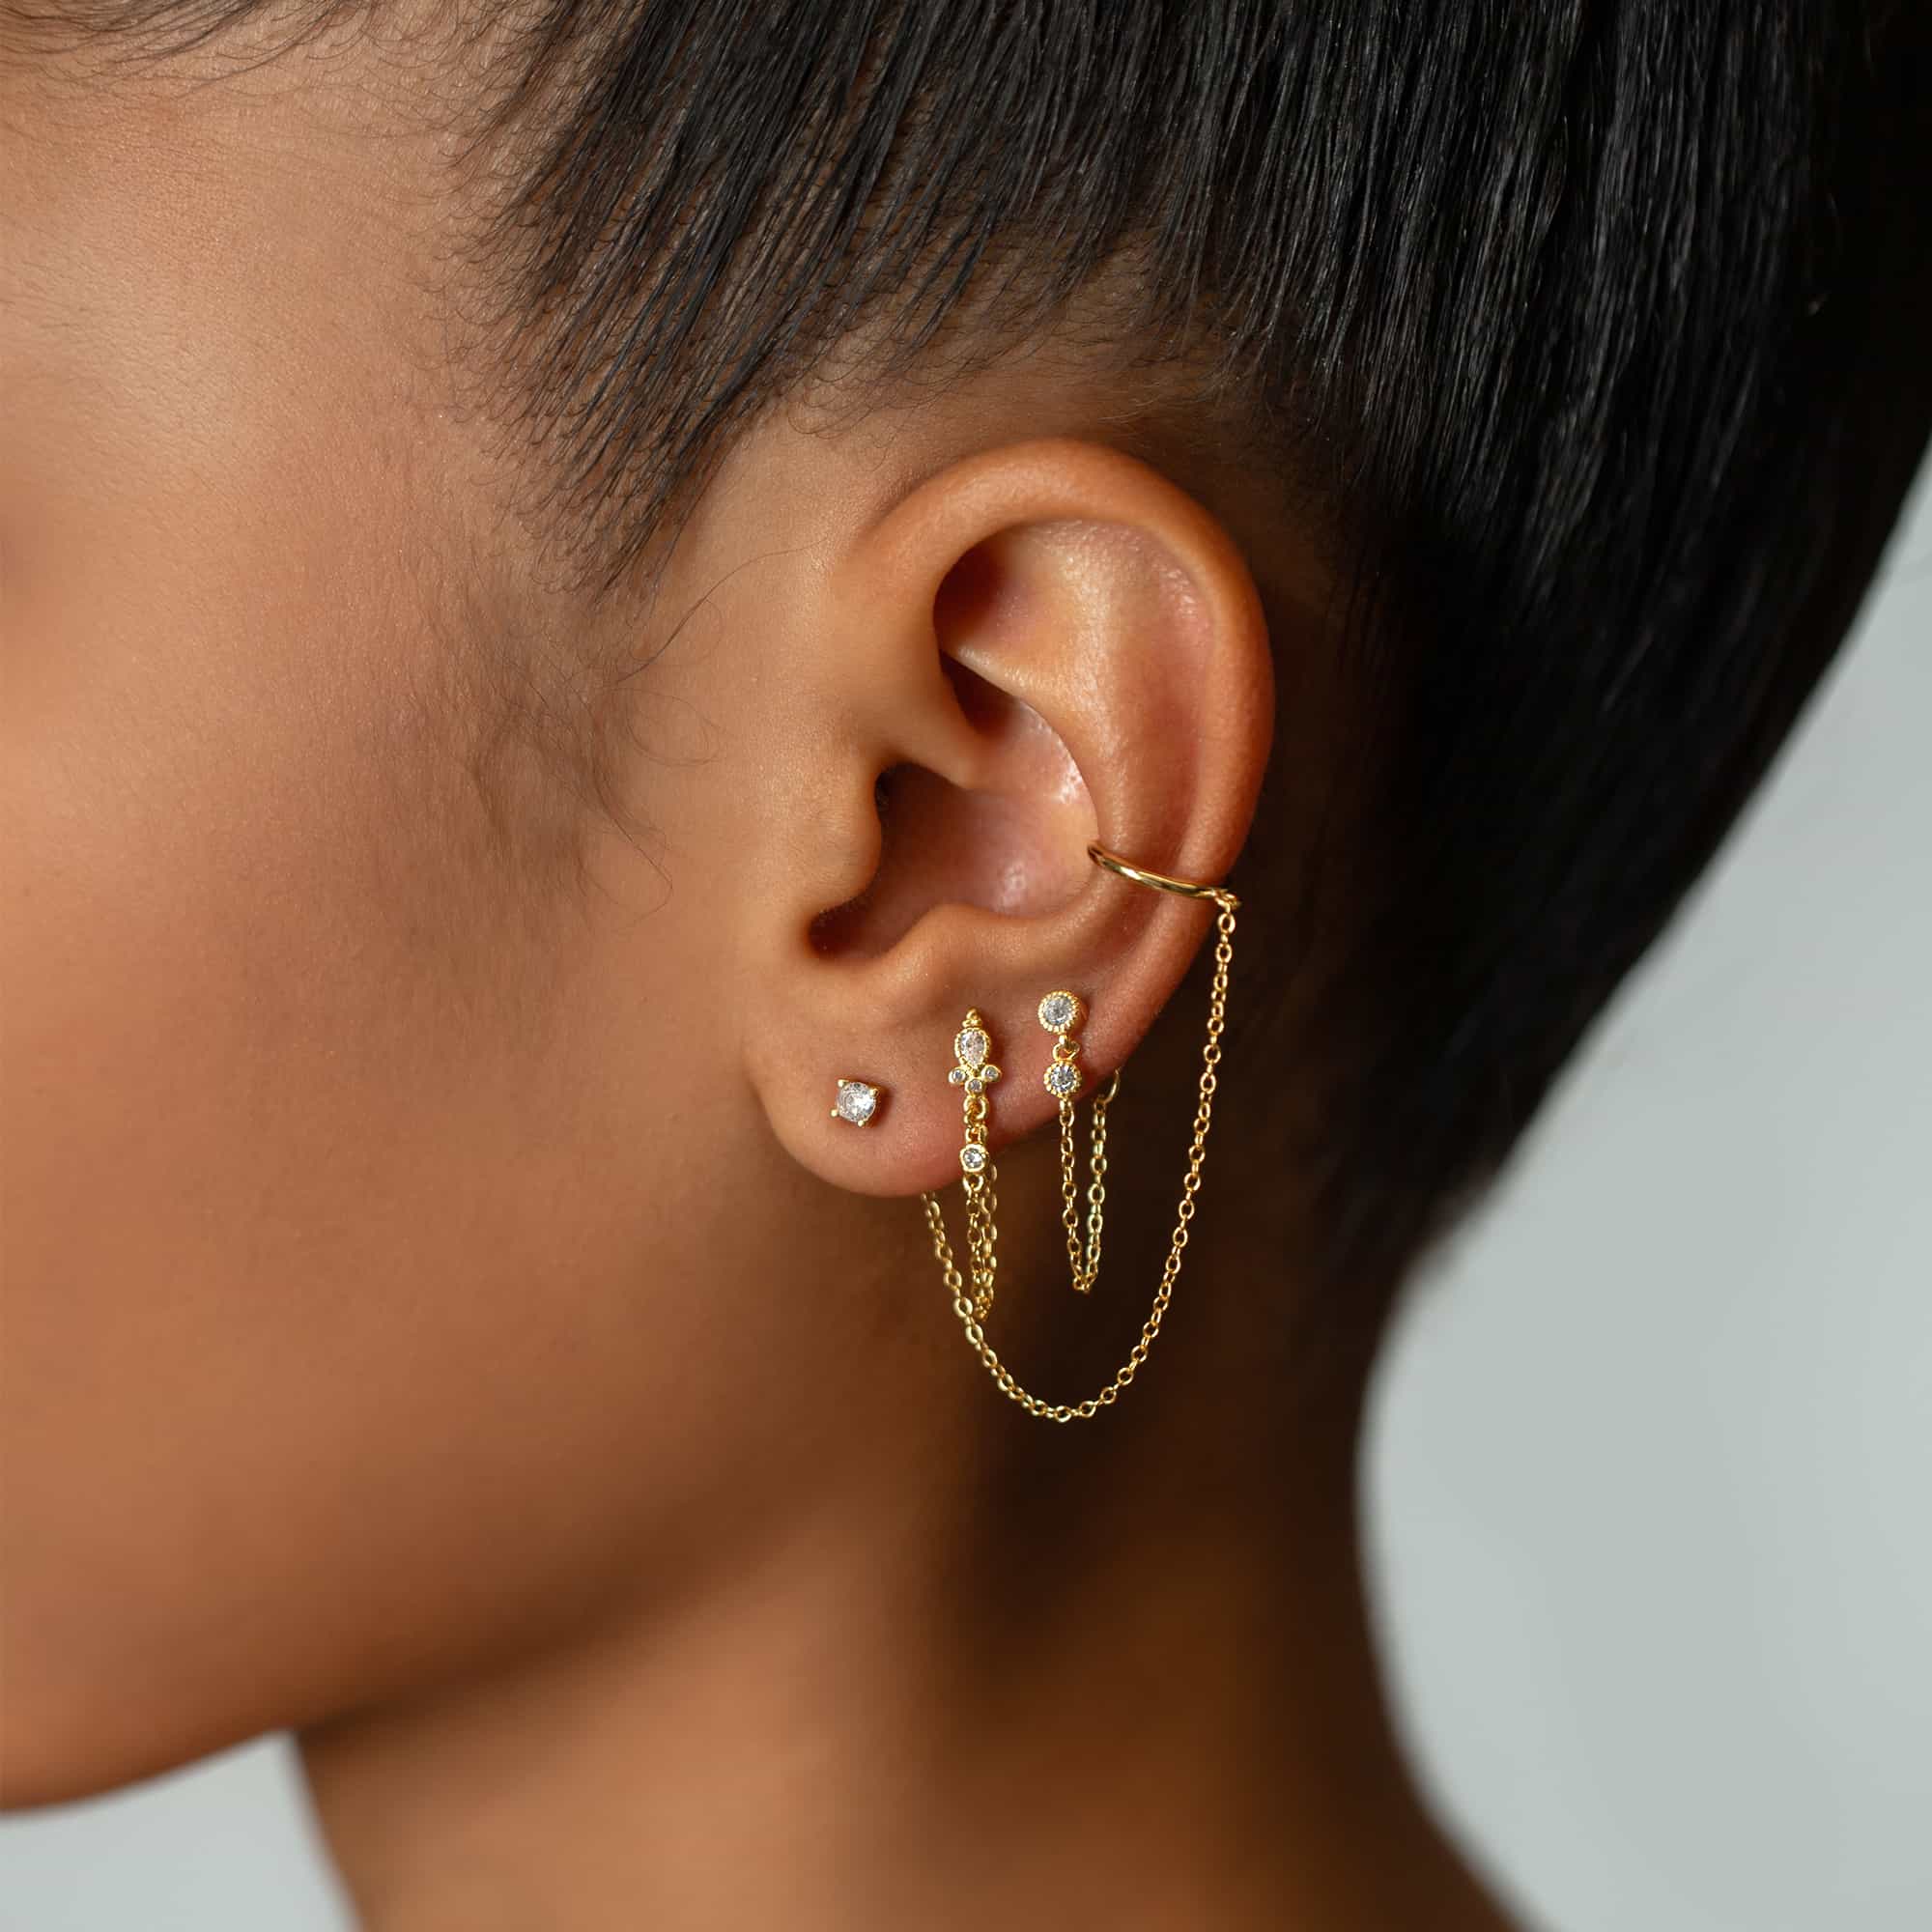 Rainbow Moon and Star Double Stud Chain Earring - Gold | Chain earrings,  Double stud earrings, Earings piercings